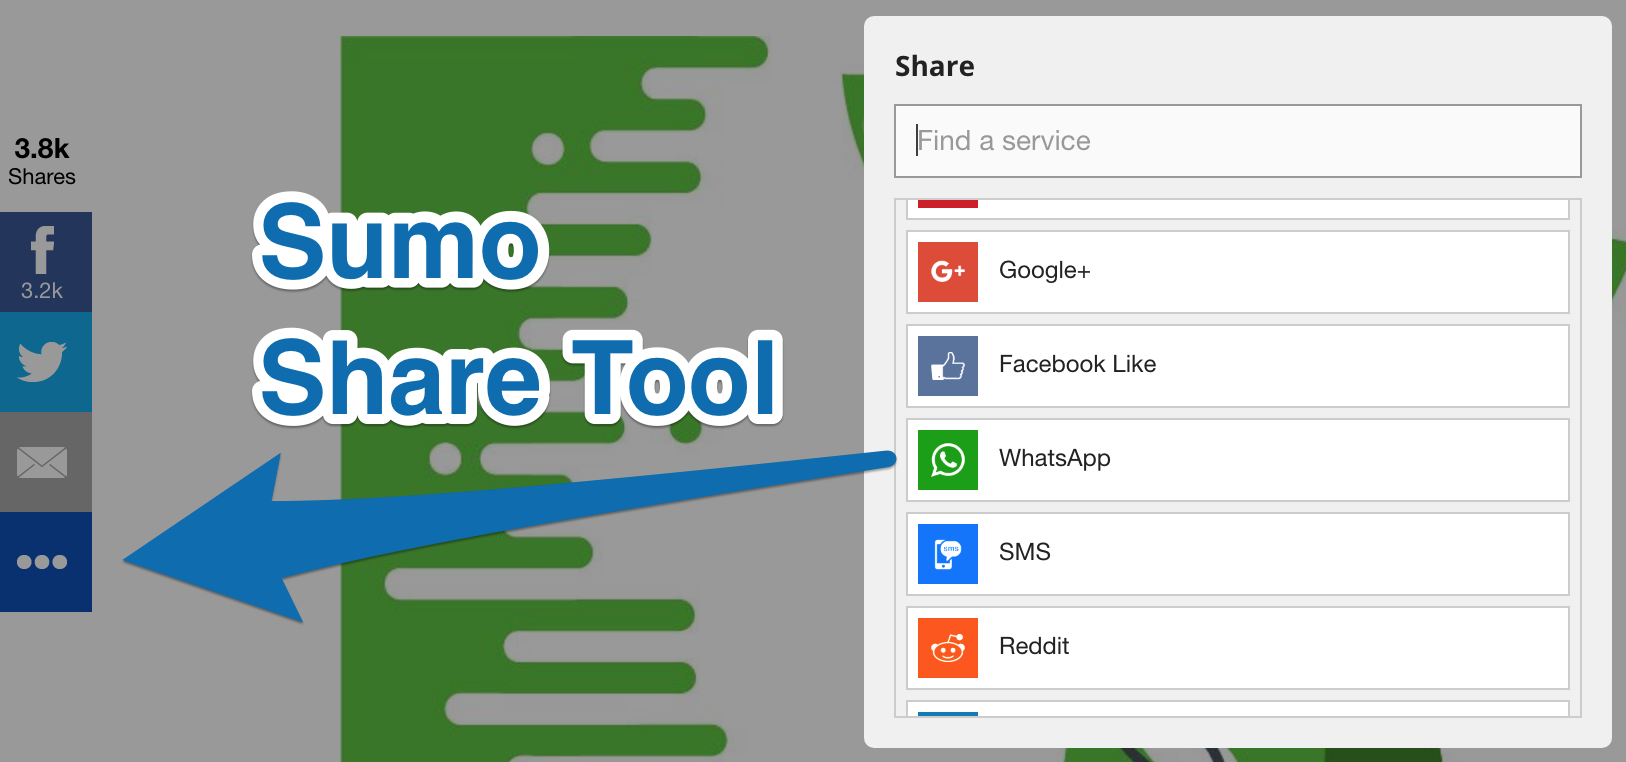 Screenshot showing the Sumo share tool